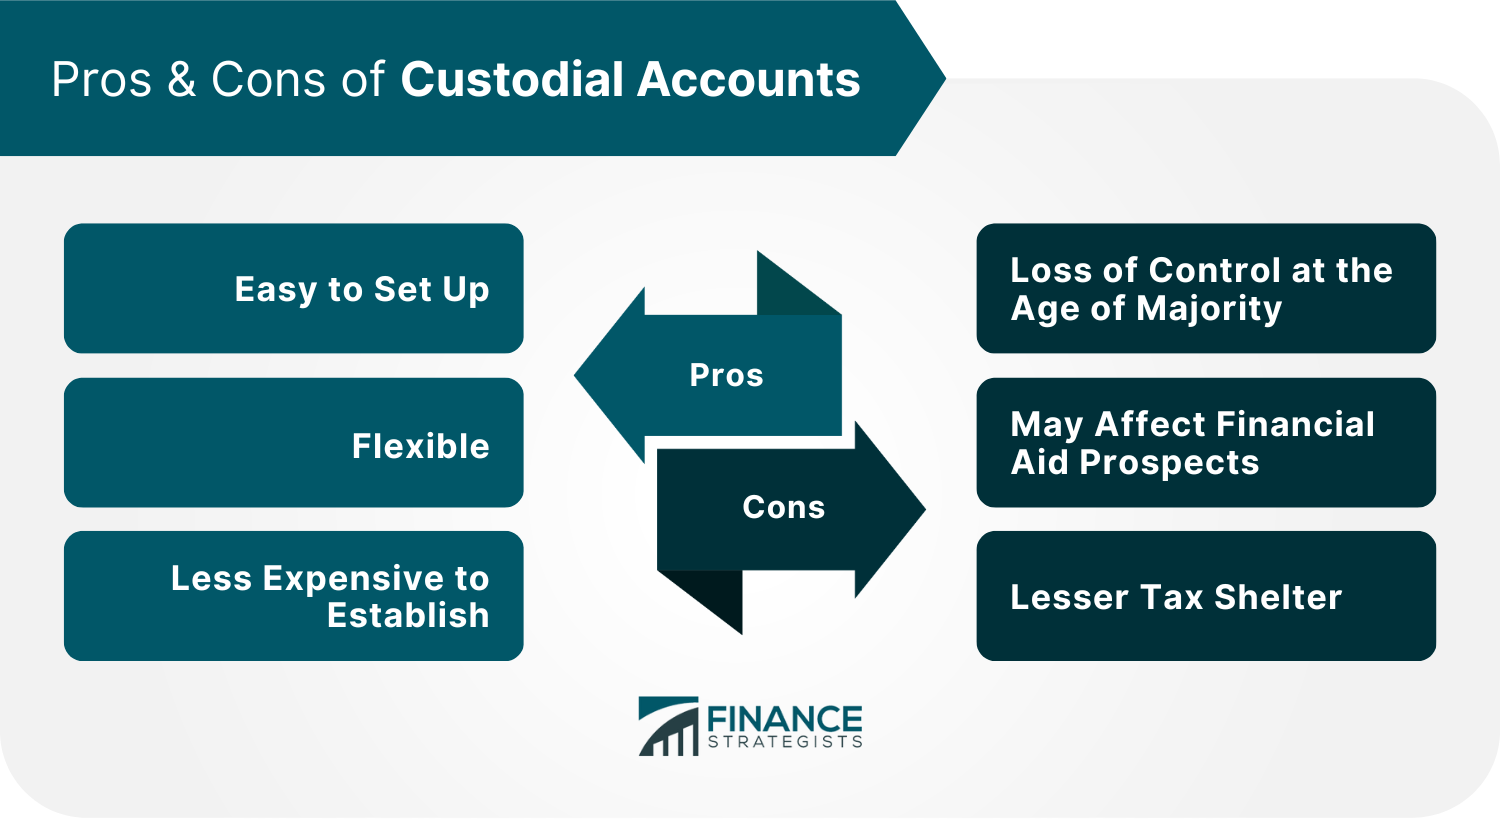 Pros & Cons of Custodial Accounts